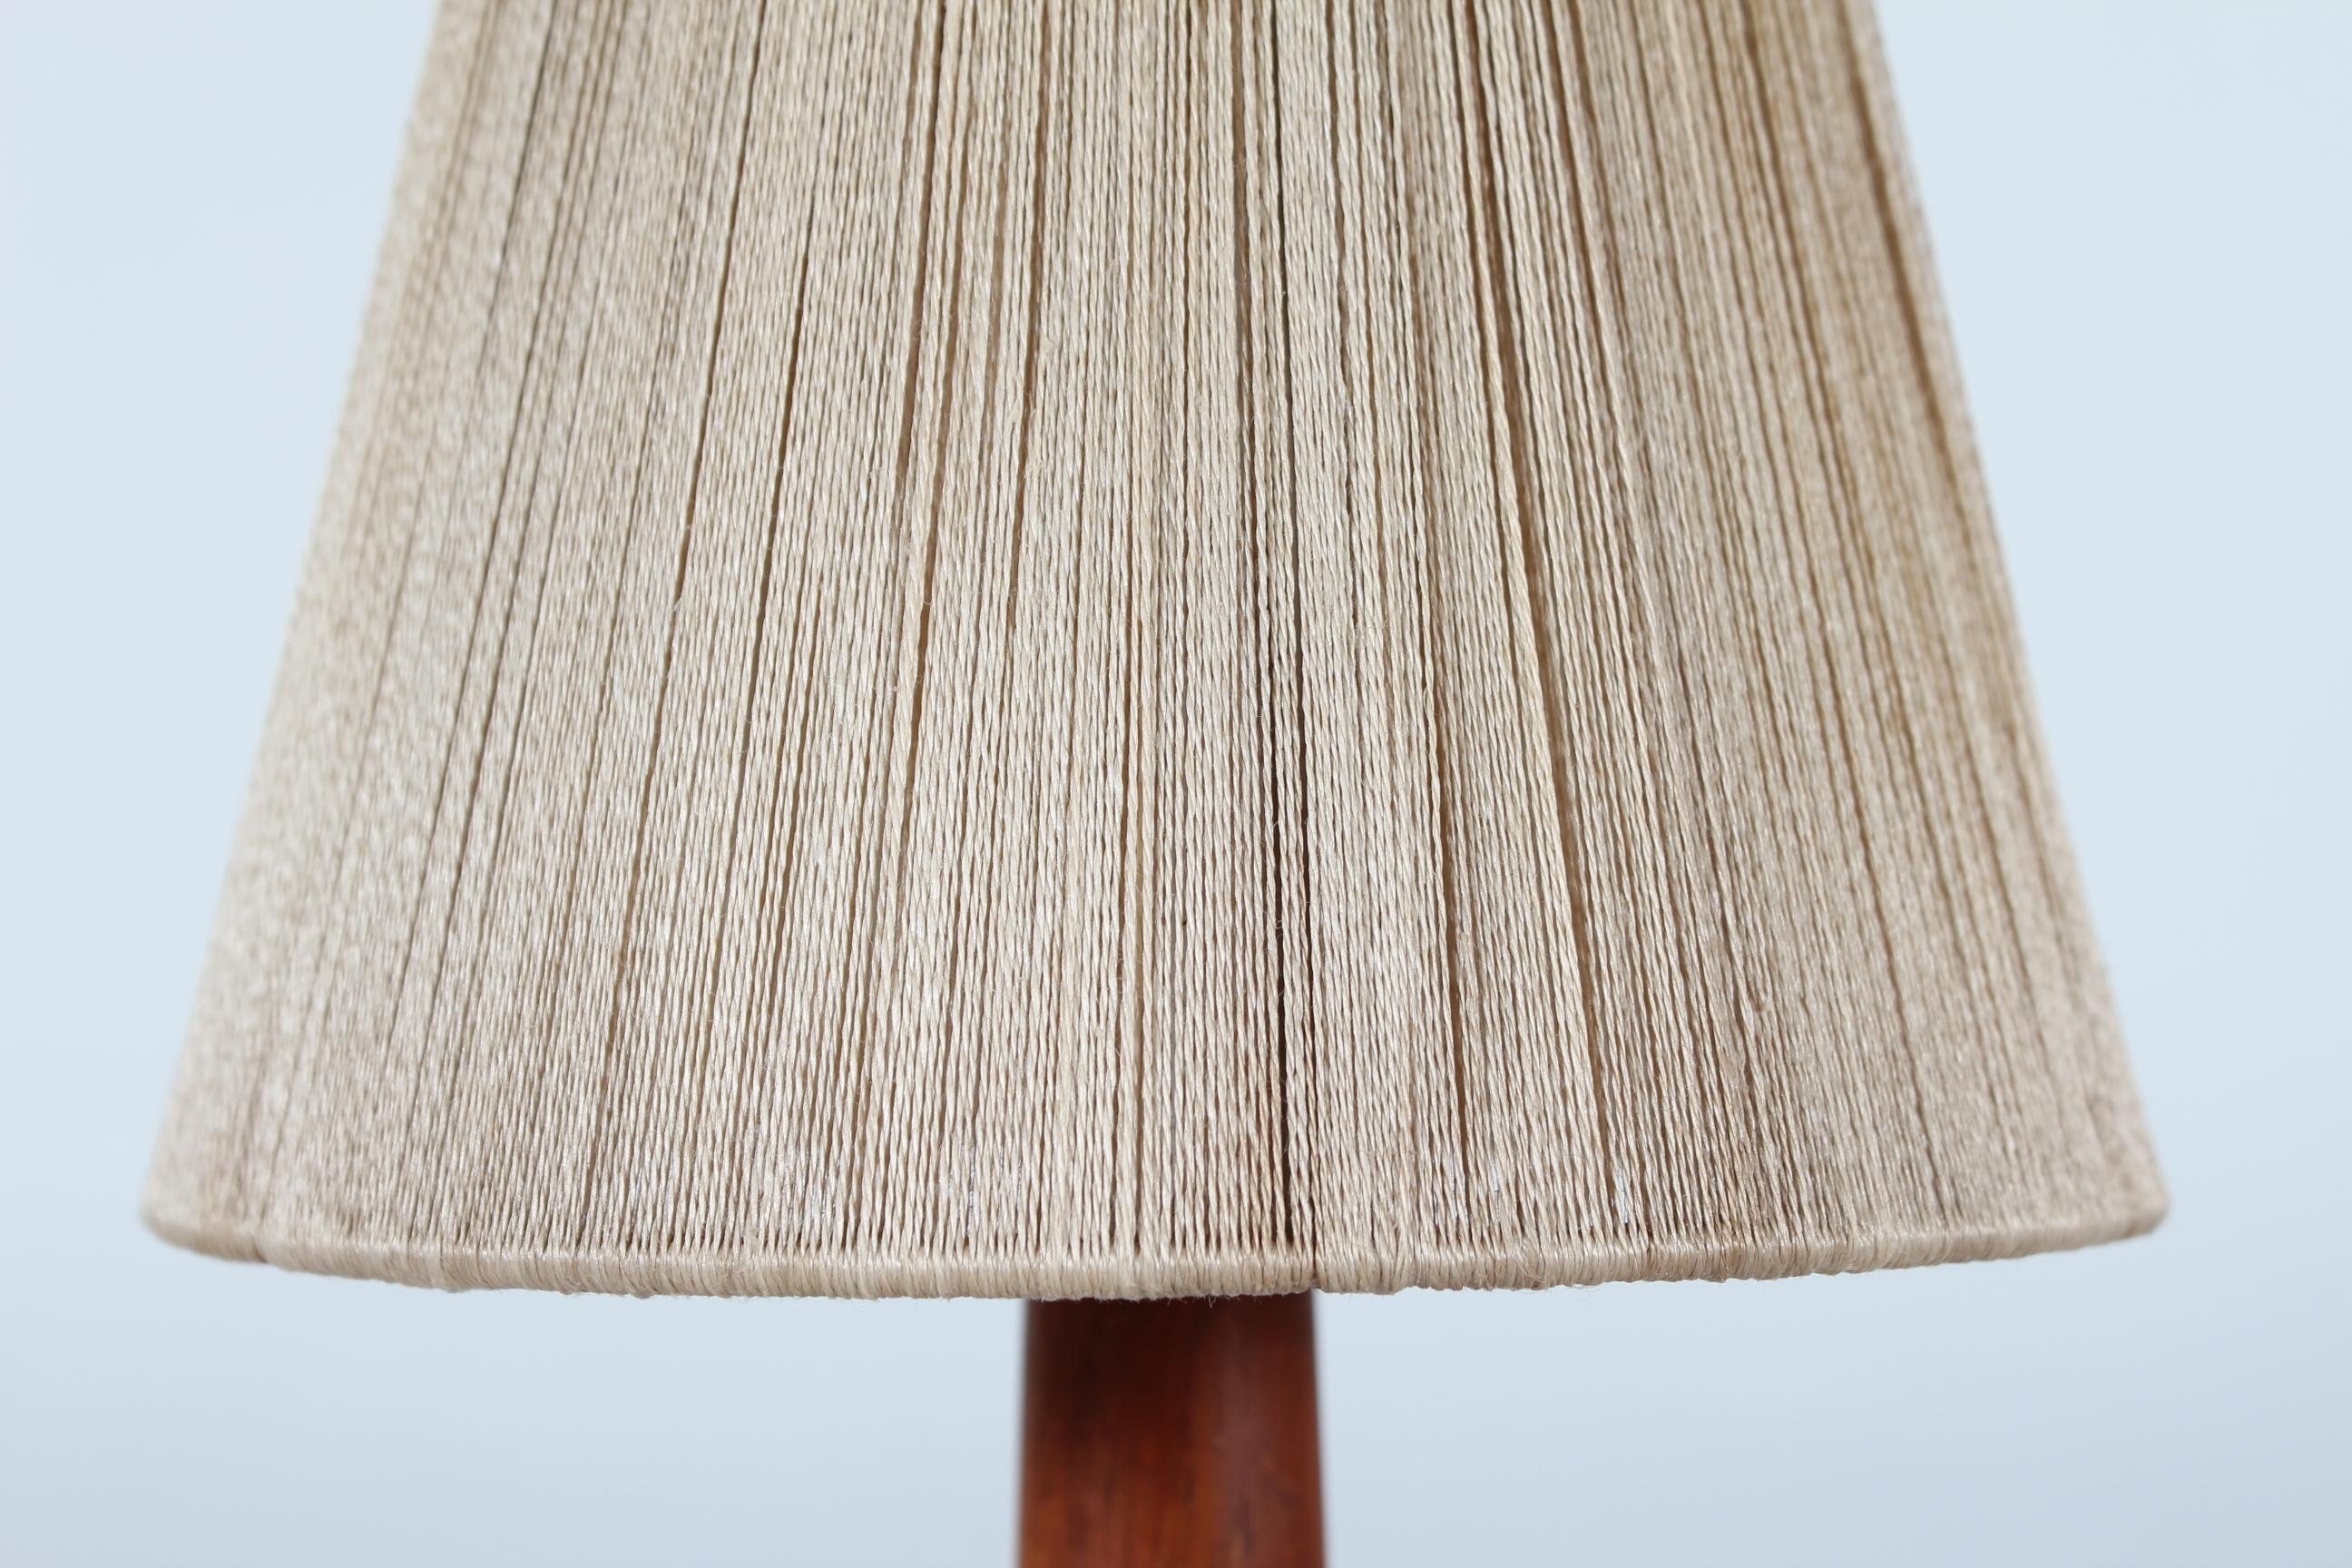 Scandinavian Modern Danish Modernist Table Lamp of Teak with Cone-Shaped Yarn Shade 1970s For Sale